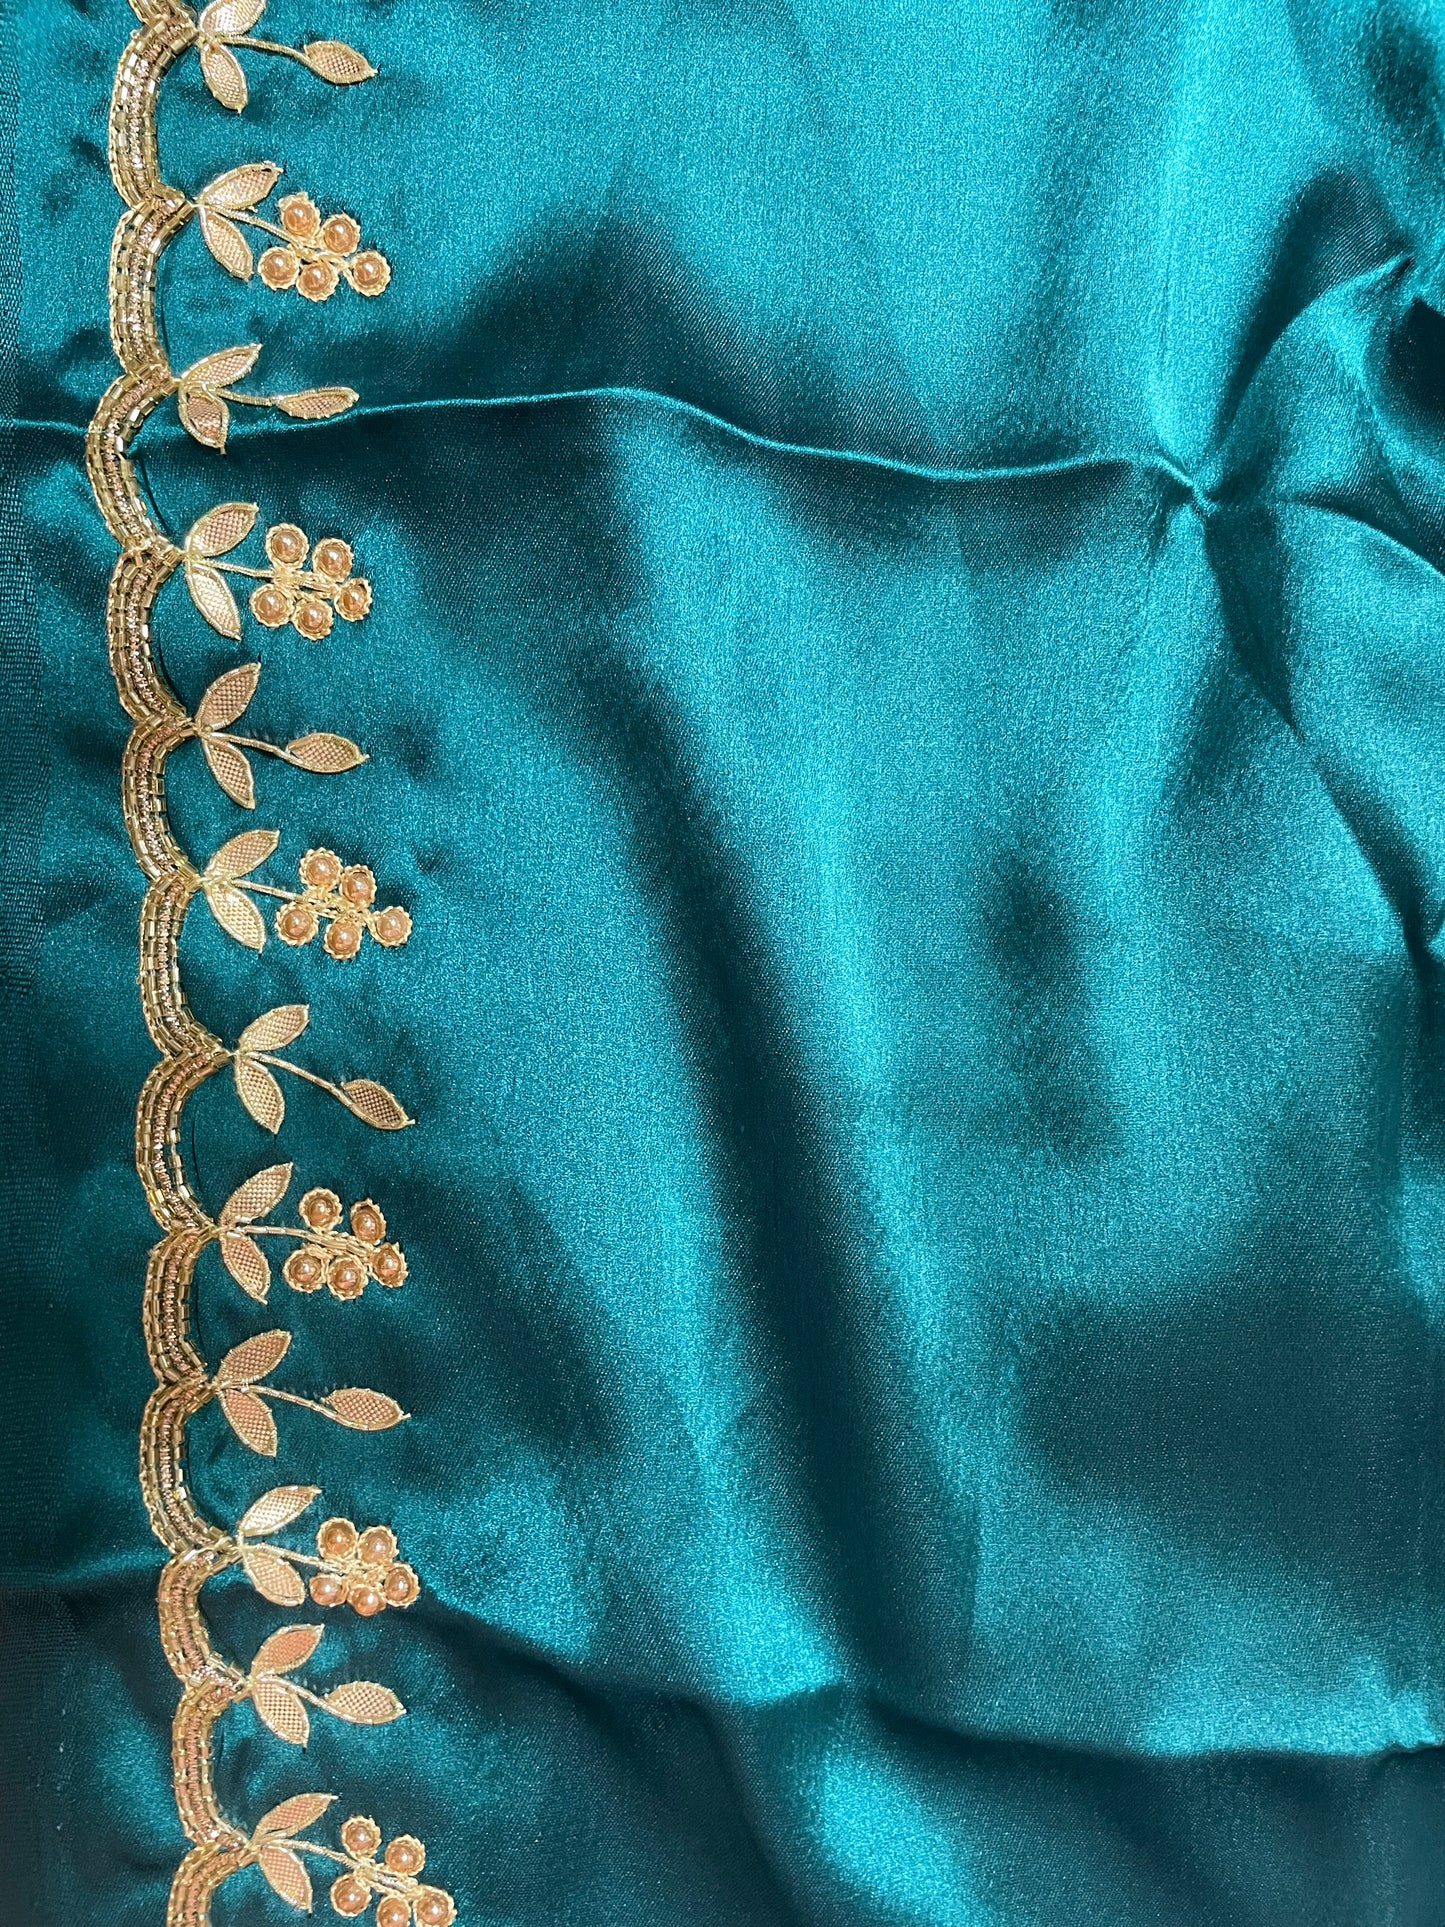 Teal Blue Glass Tissue Saree With Gota Patti Border